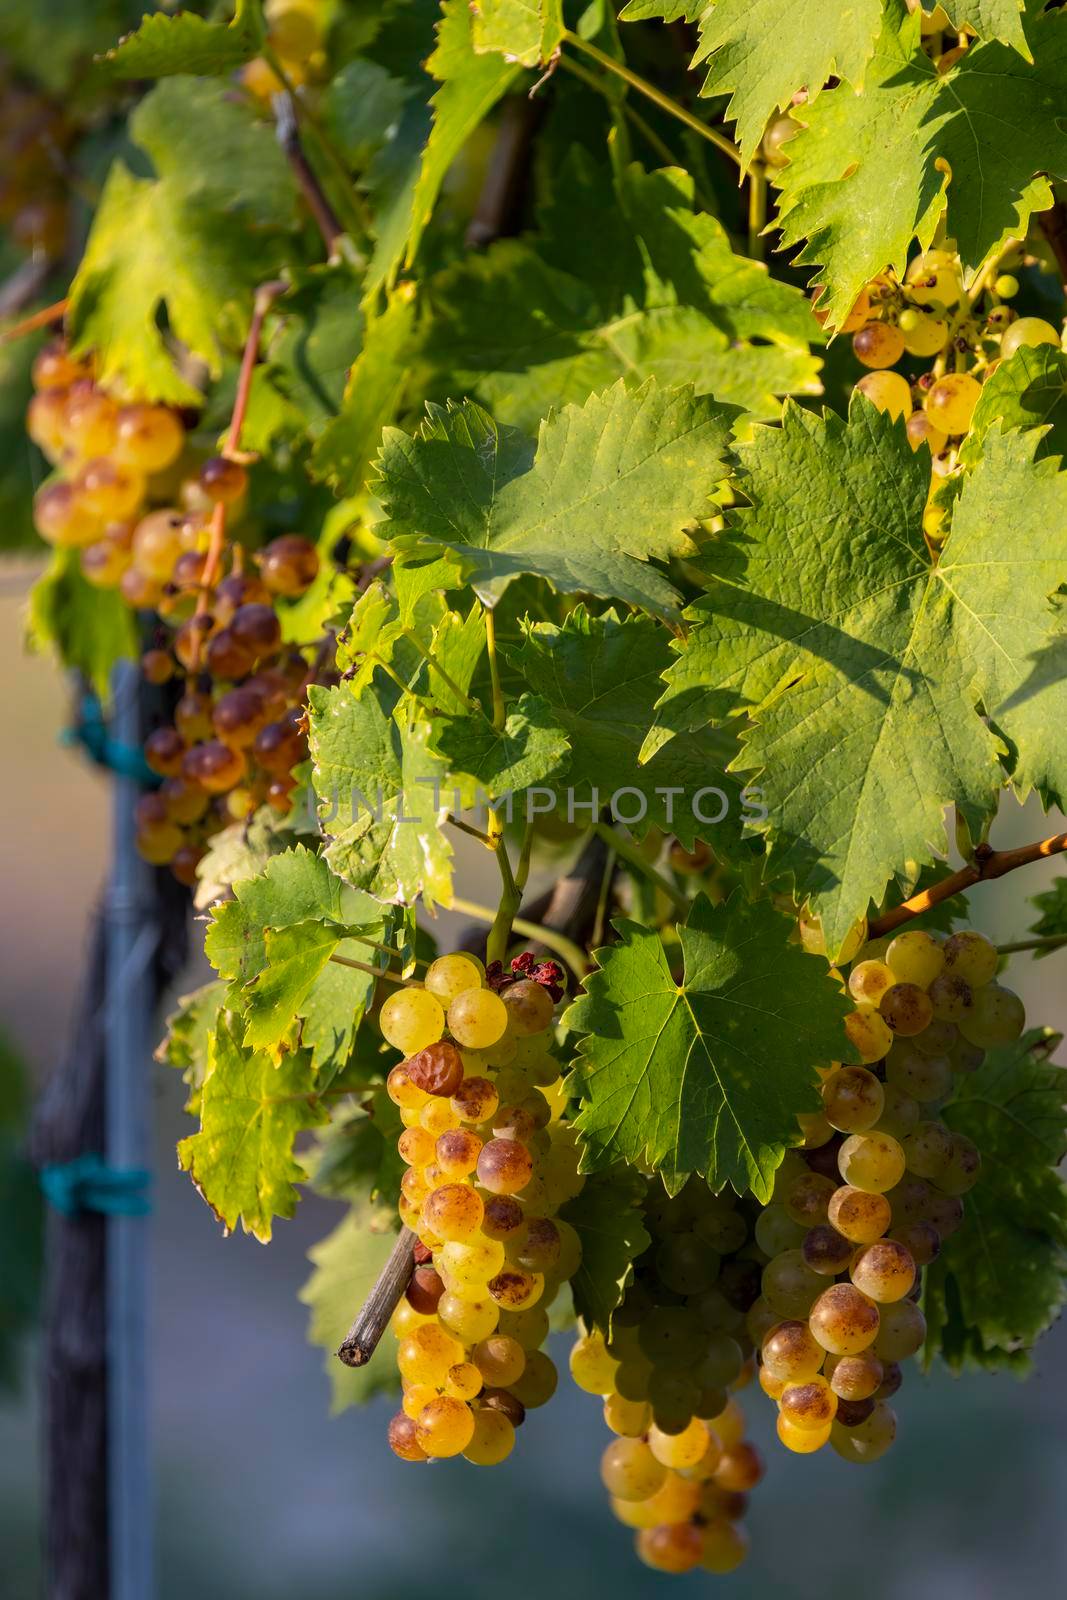 Grapes yellow muscat near Hercegkut, Tokaj region, Hungary by phbcz